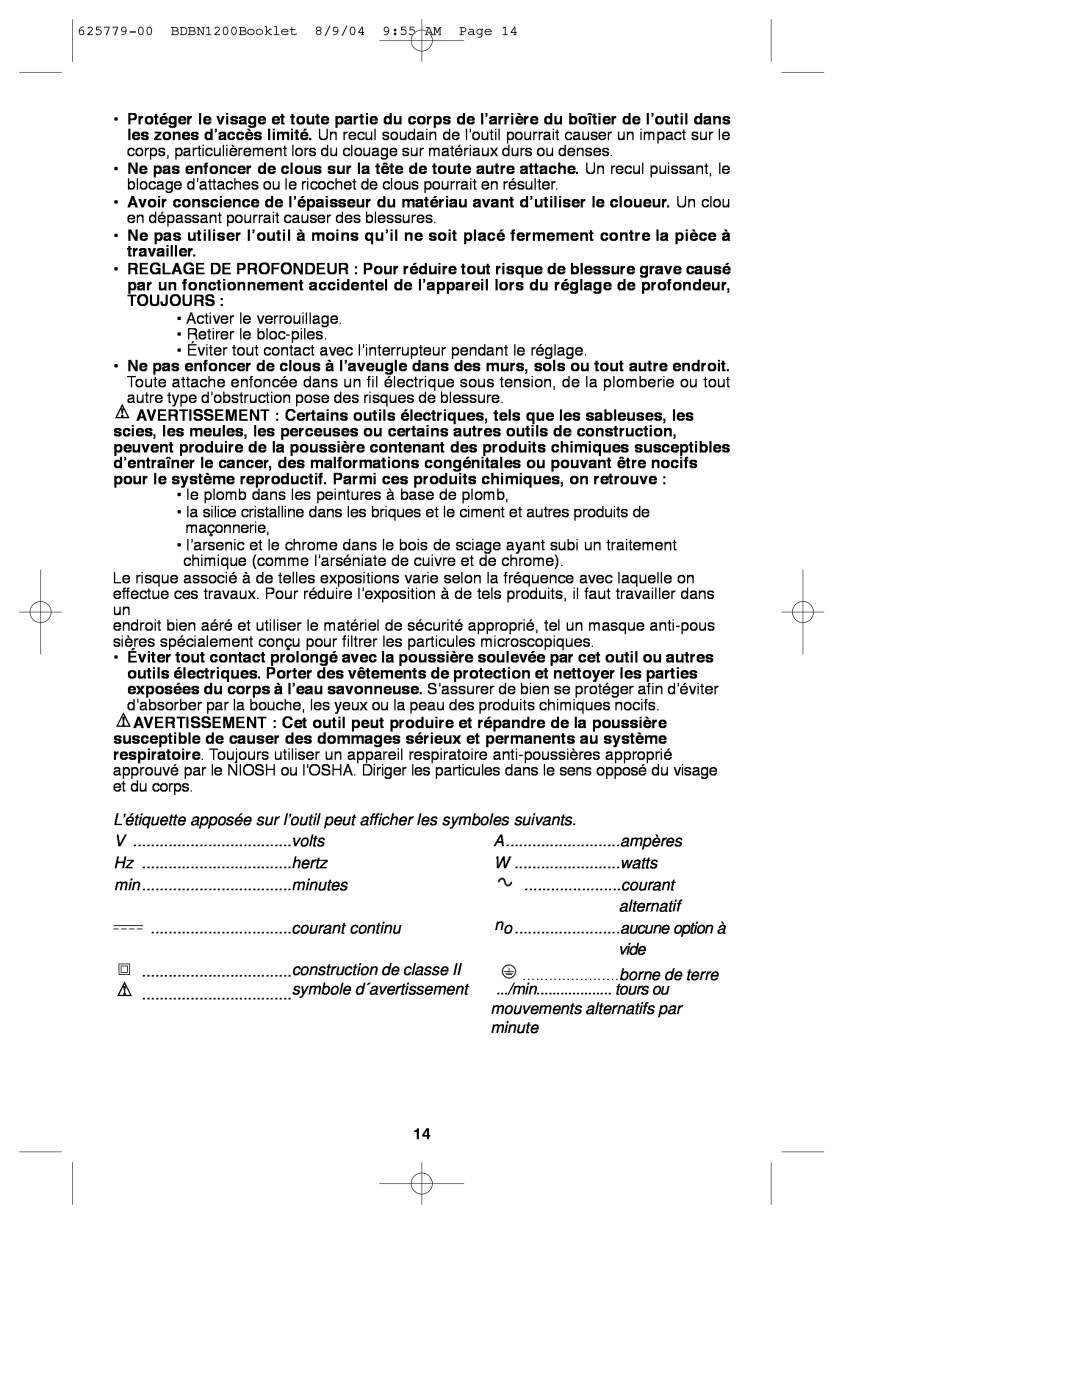 Black & Decker 625779-00, BDBN1200 instruction manual Toujours 